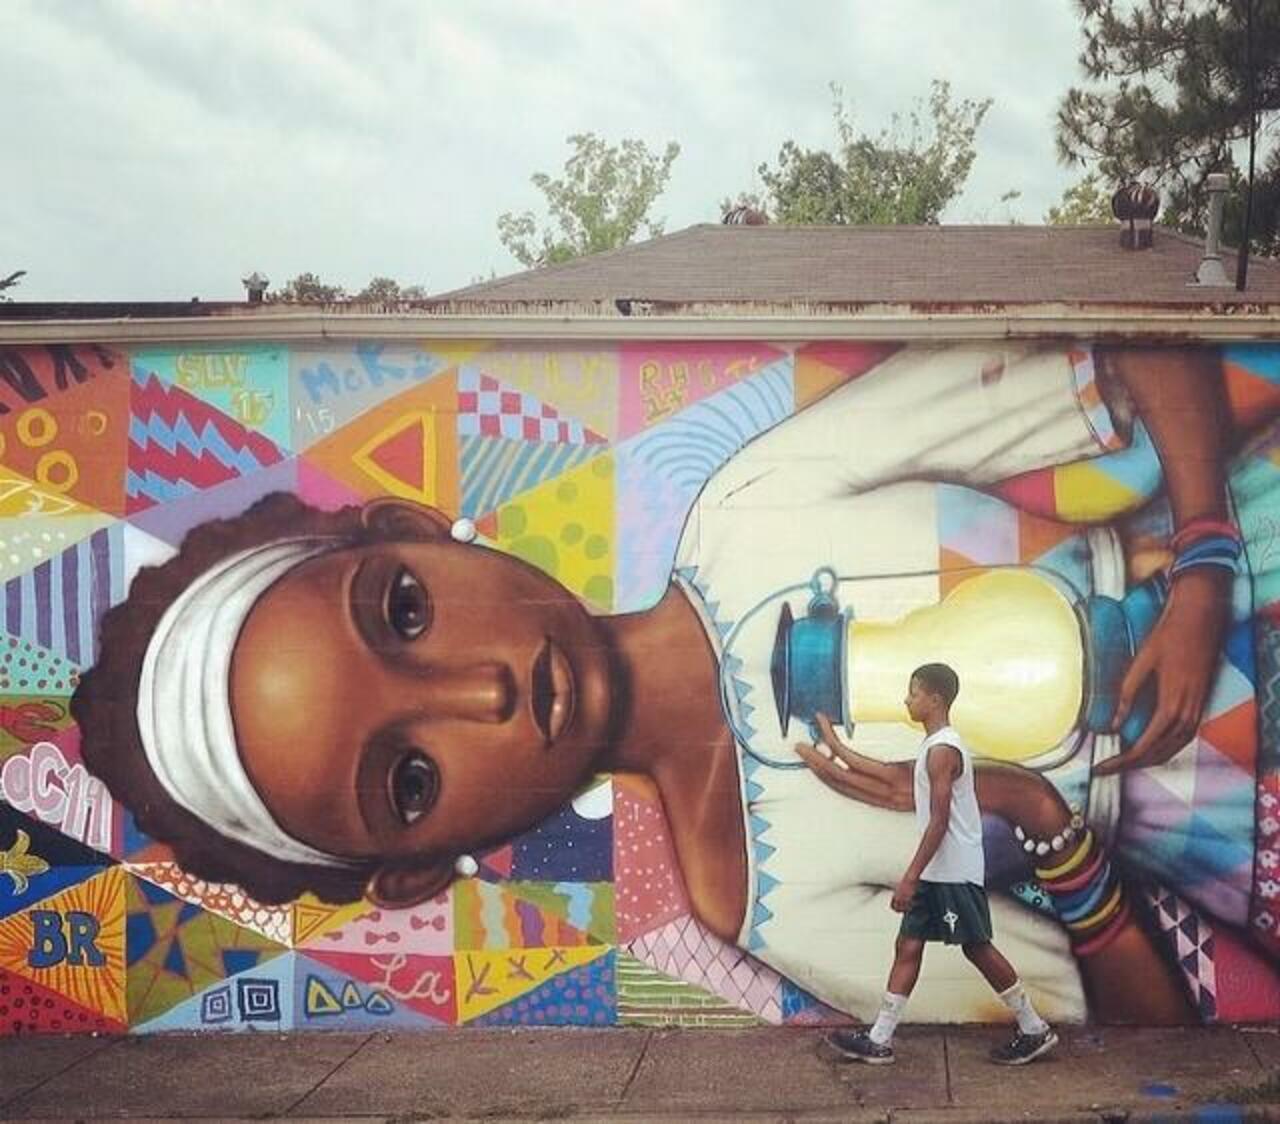 Artist #Seth recent wonderful Street Art wall in Baton Rouge, Louisiana, USA #art #mural #graffiti #streetart http://t.co/Sv8rY4NwP2